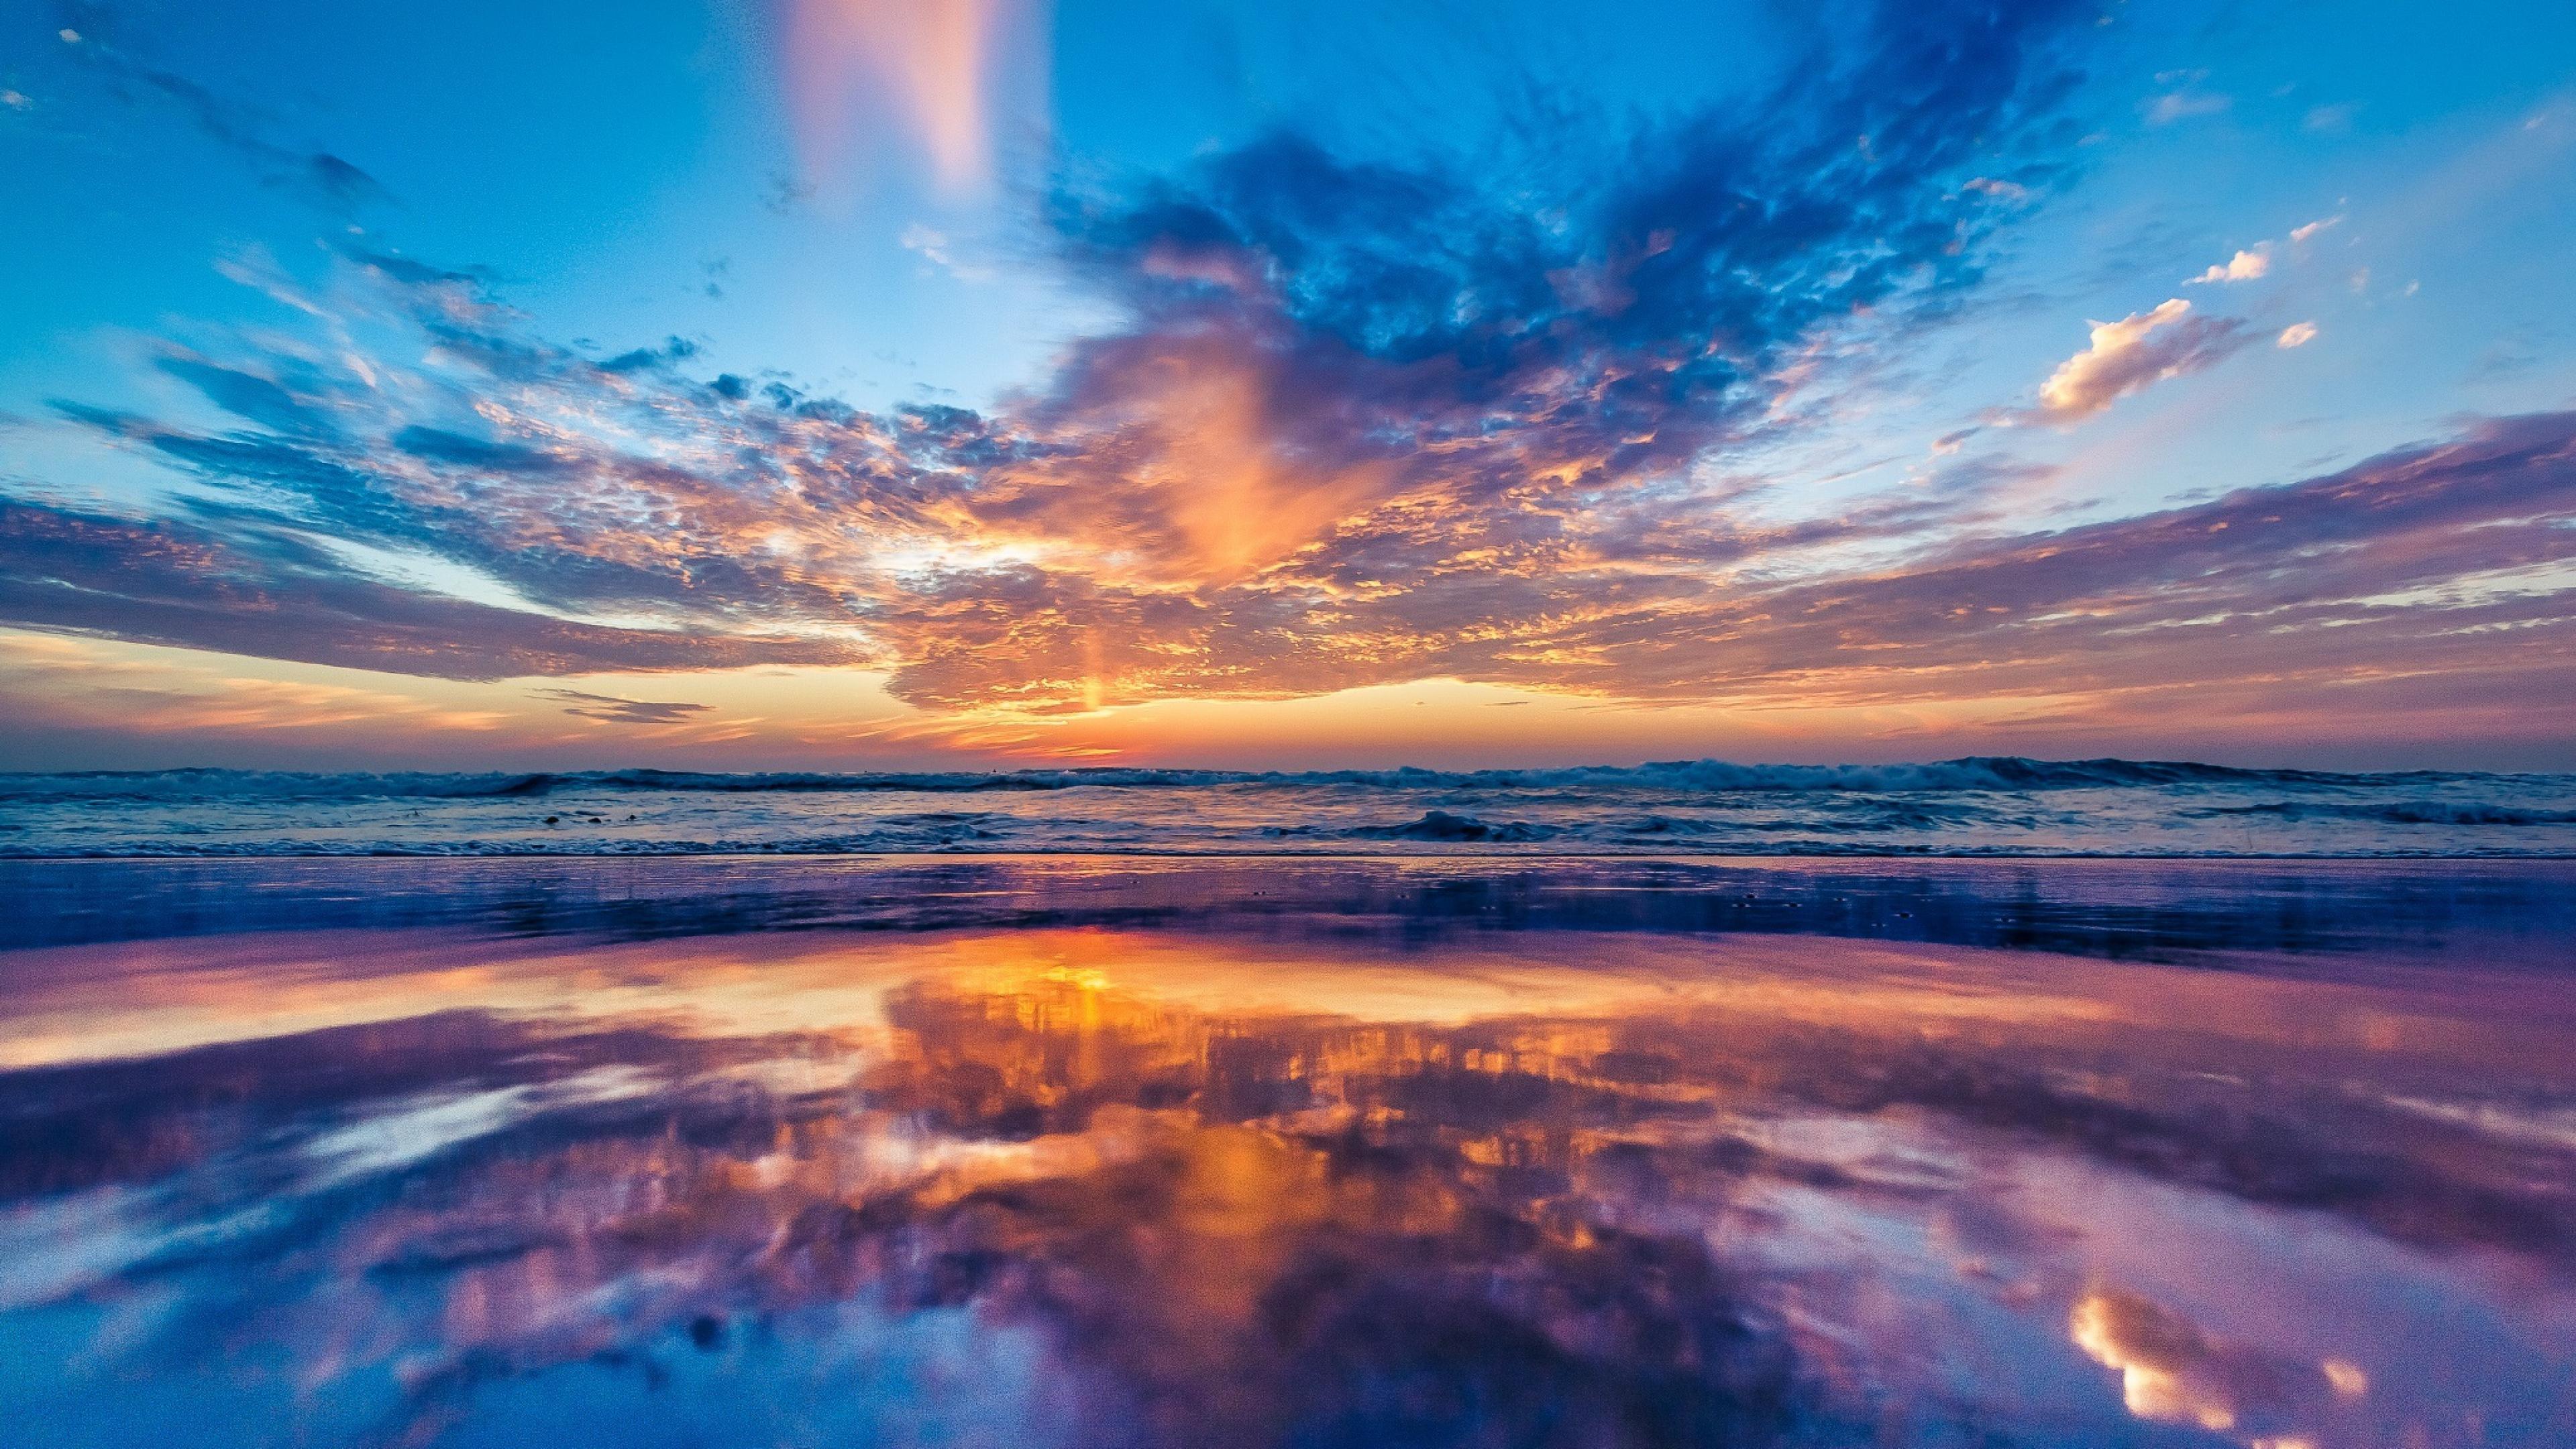 Ocean Sky Sunset Beach, HD Nature, 4k Wallpaper, Image